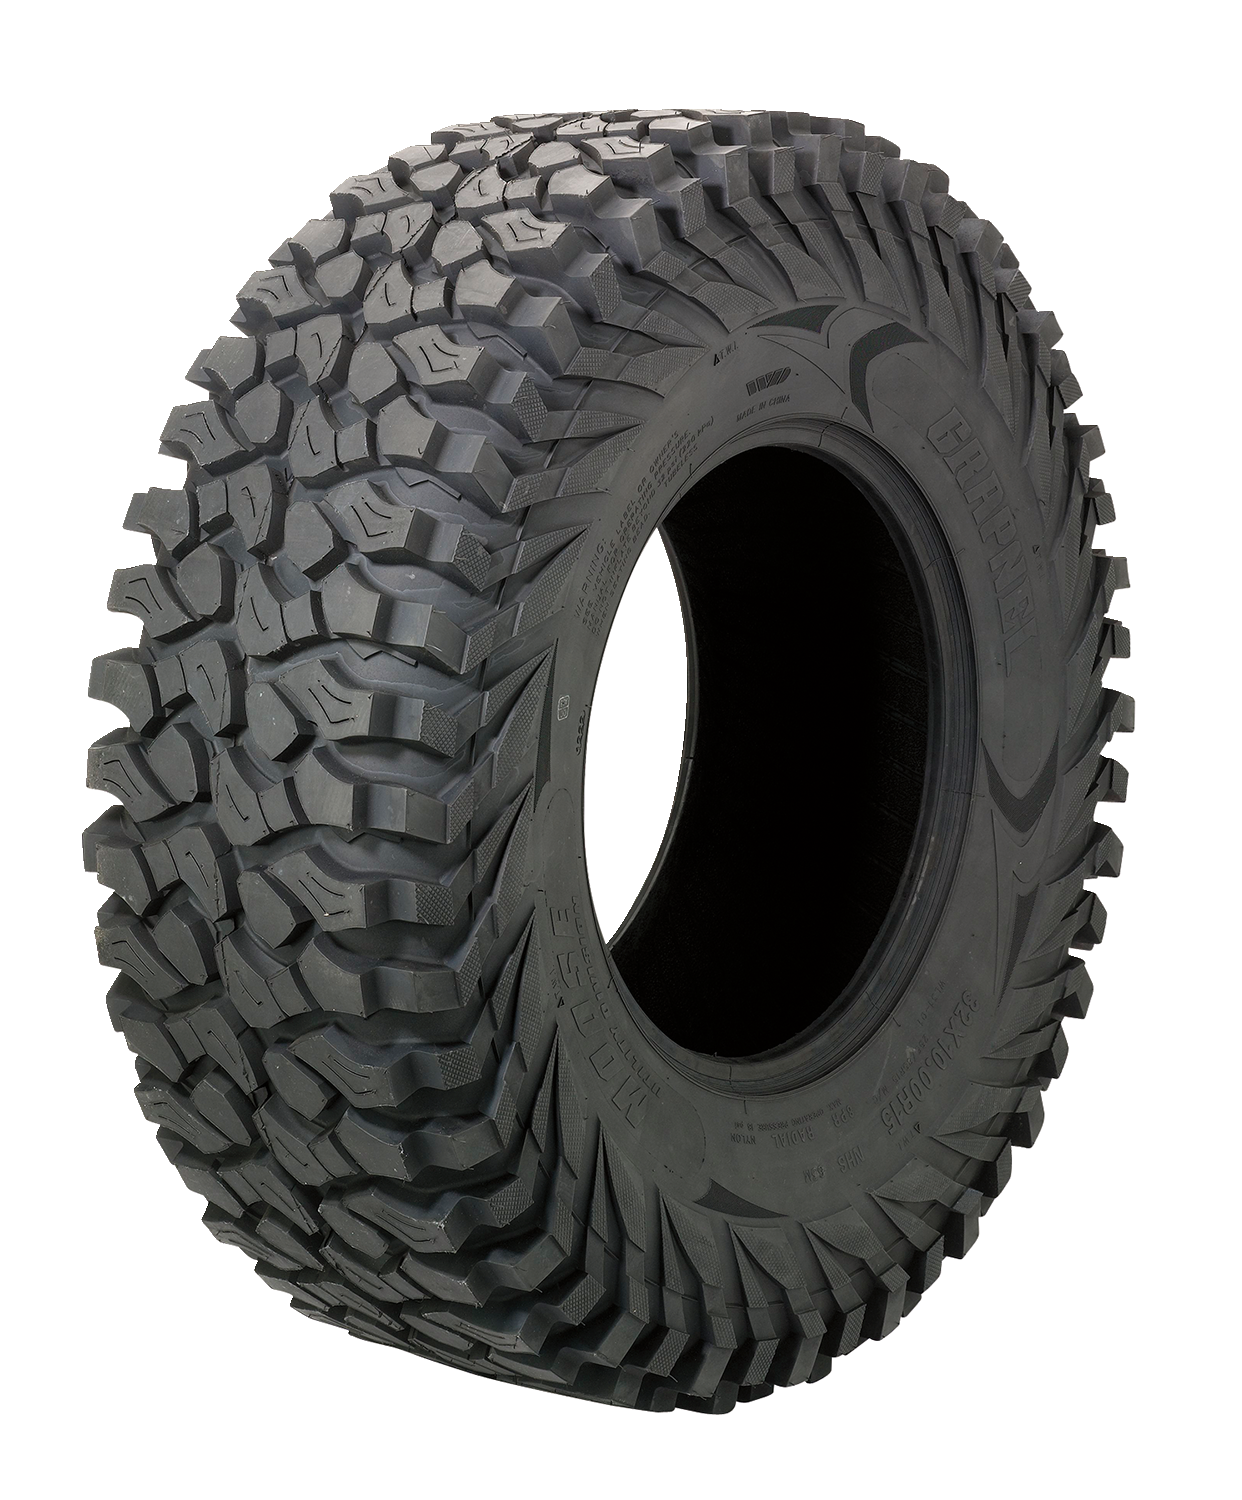 MOOSE UTILITY Tire - Grapnel - Front/Rear - 32x10R15 - 8 Ply WVSWL31321015R8